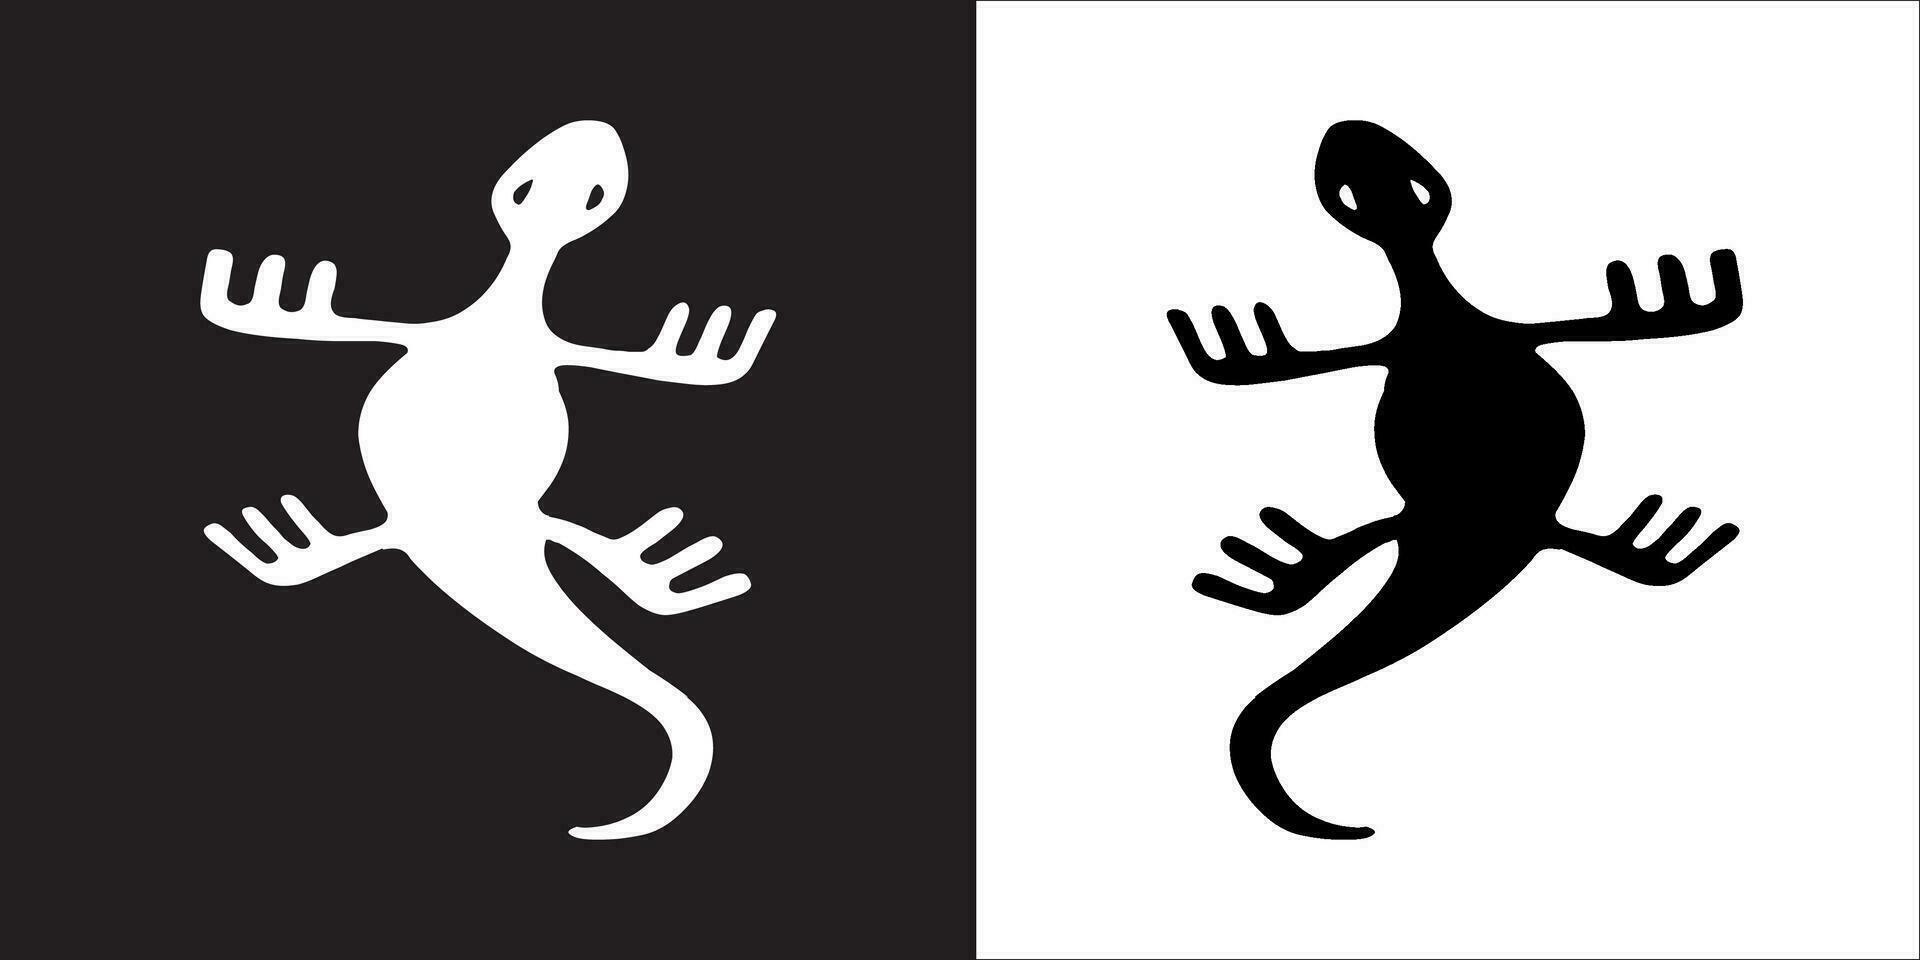 Illustration vector graphics of lizard icon